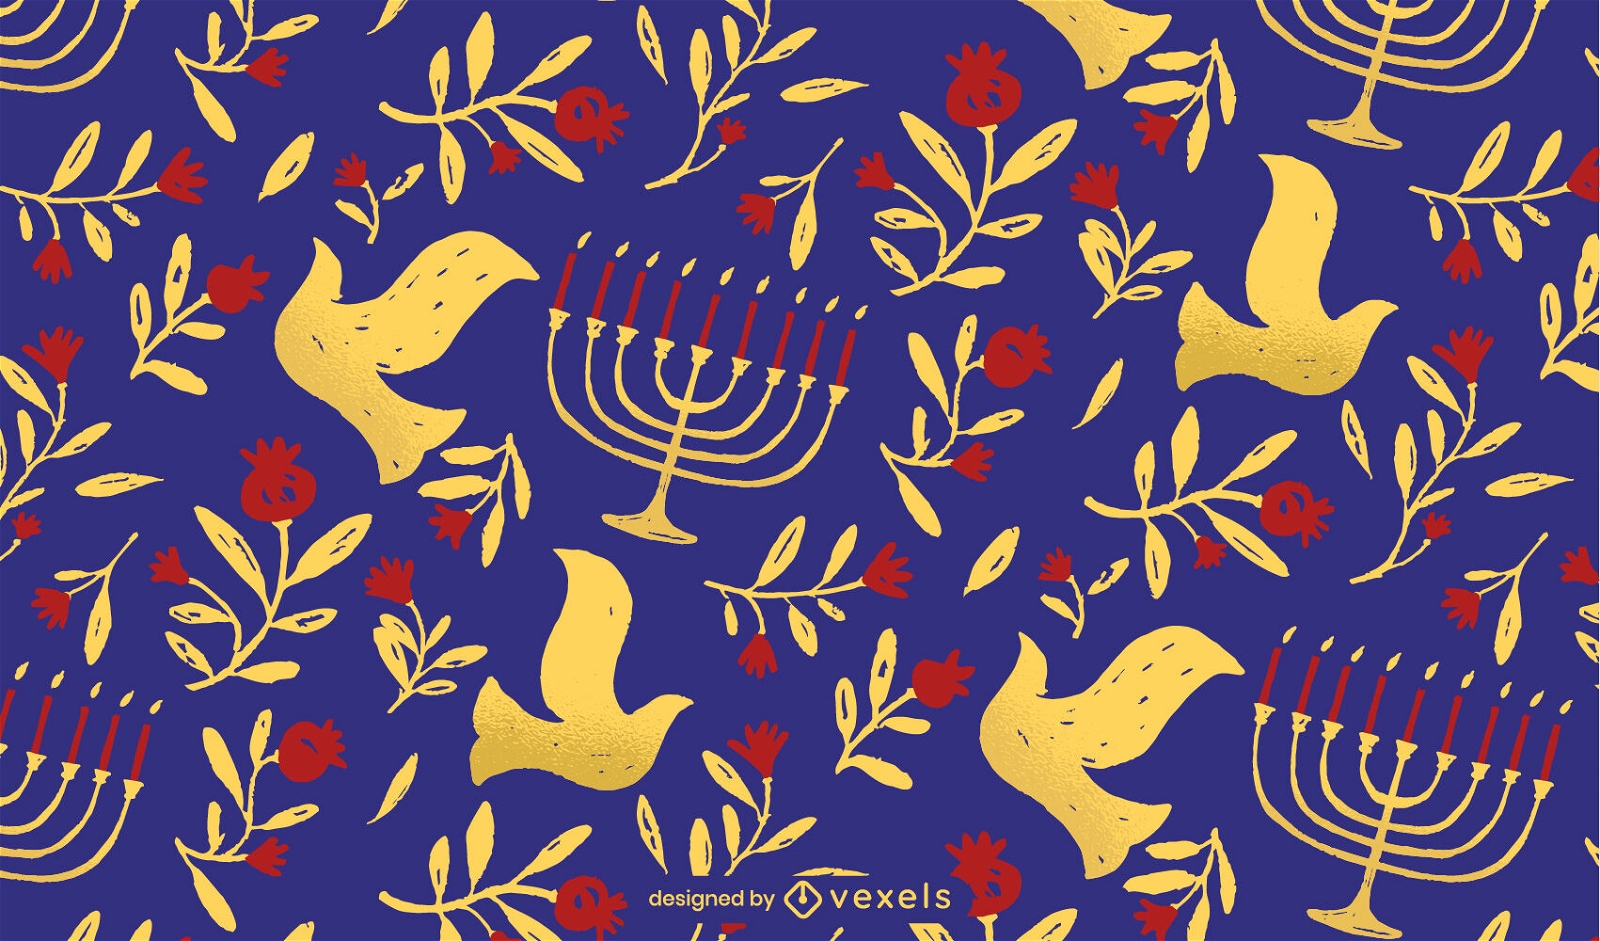 Elementos de Hanukkah doodle padr?o